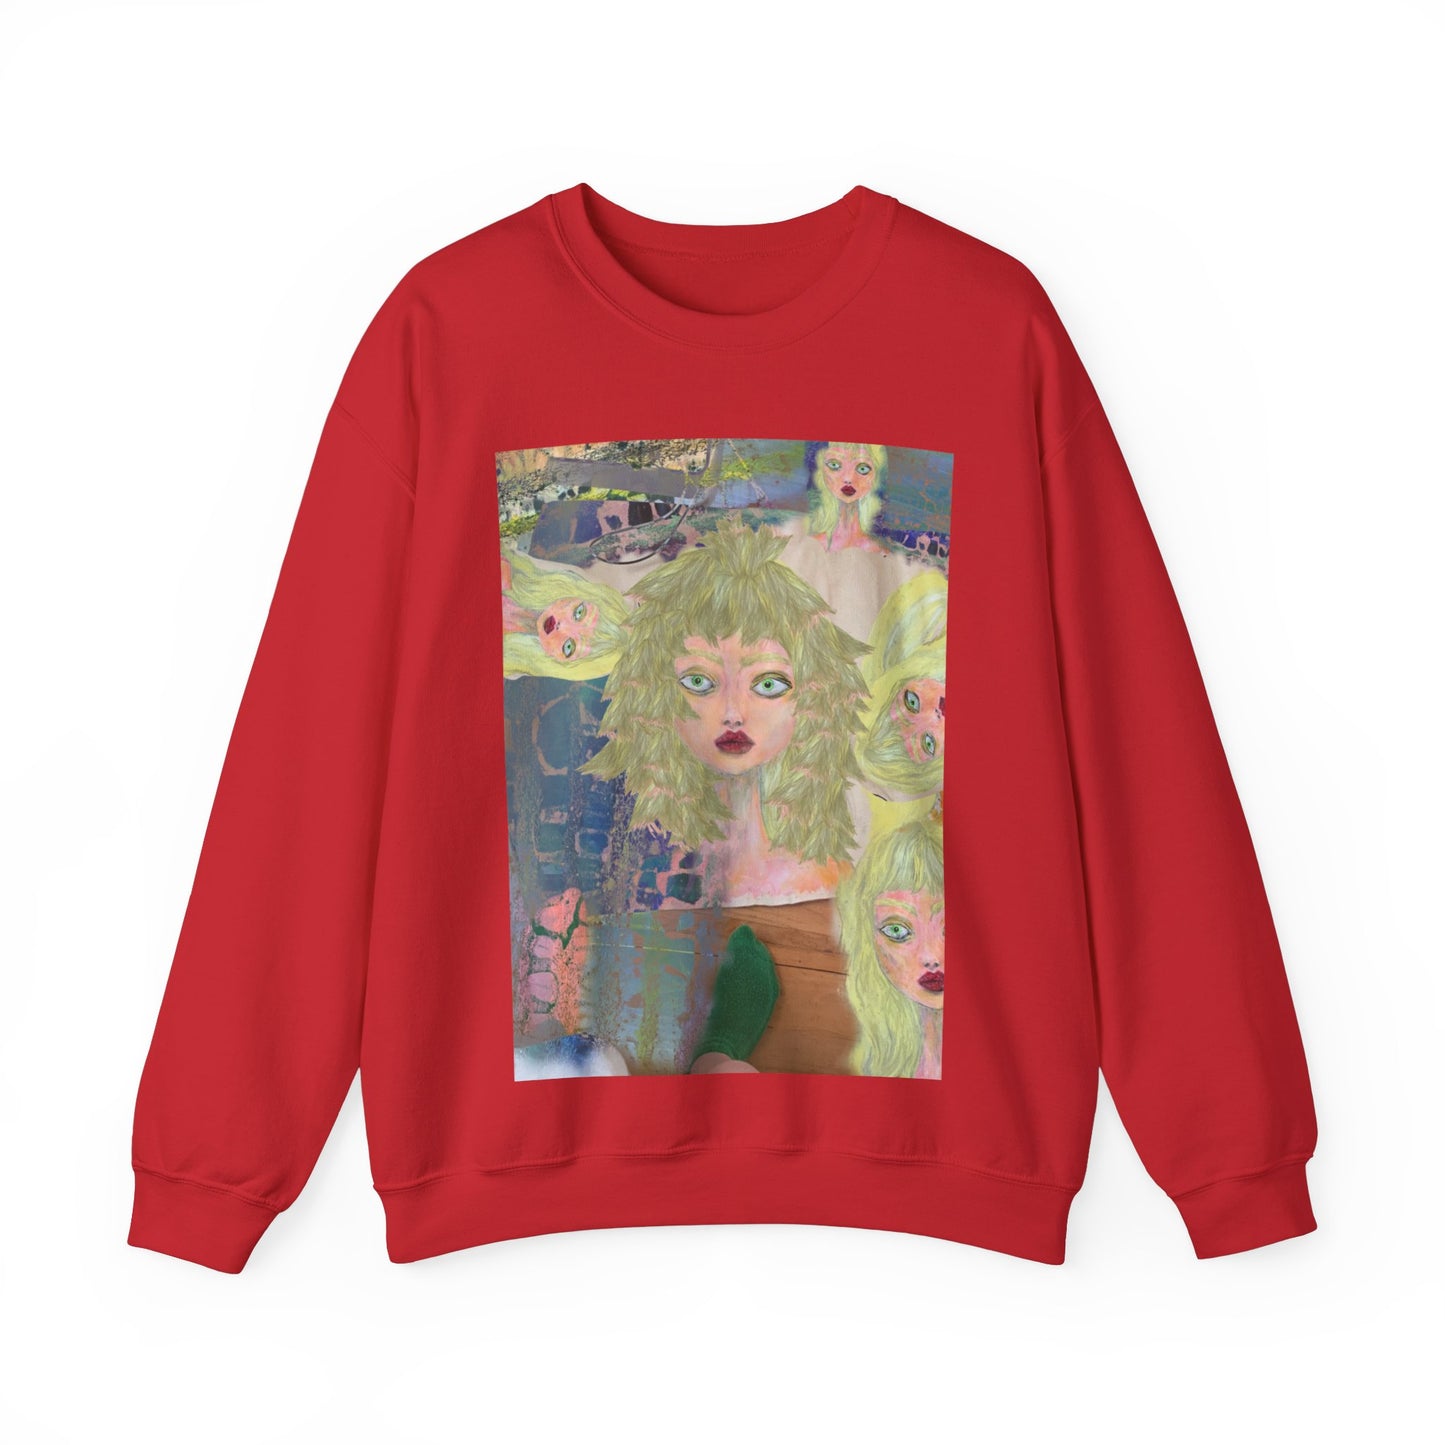 Lili Love Me Unisex Heavy Blend™ Crewneck Sweatshirt